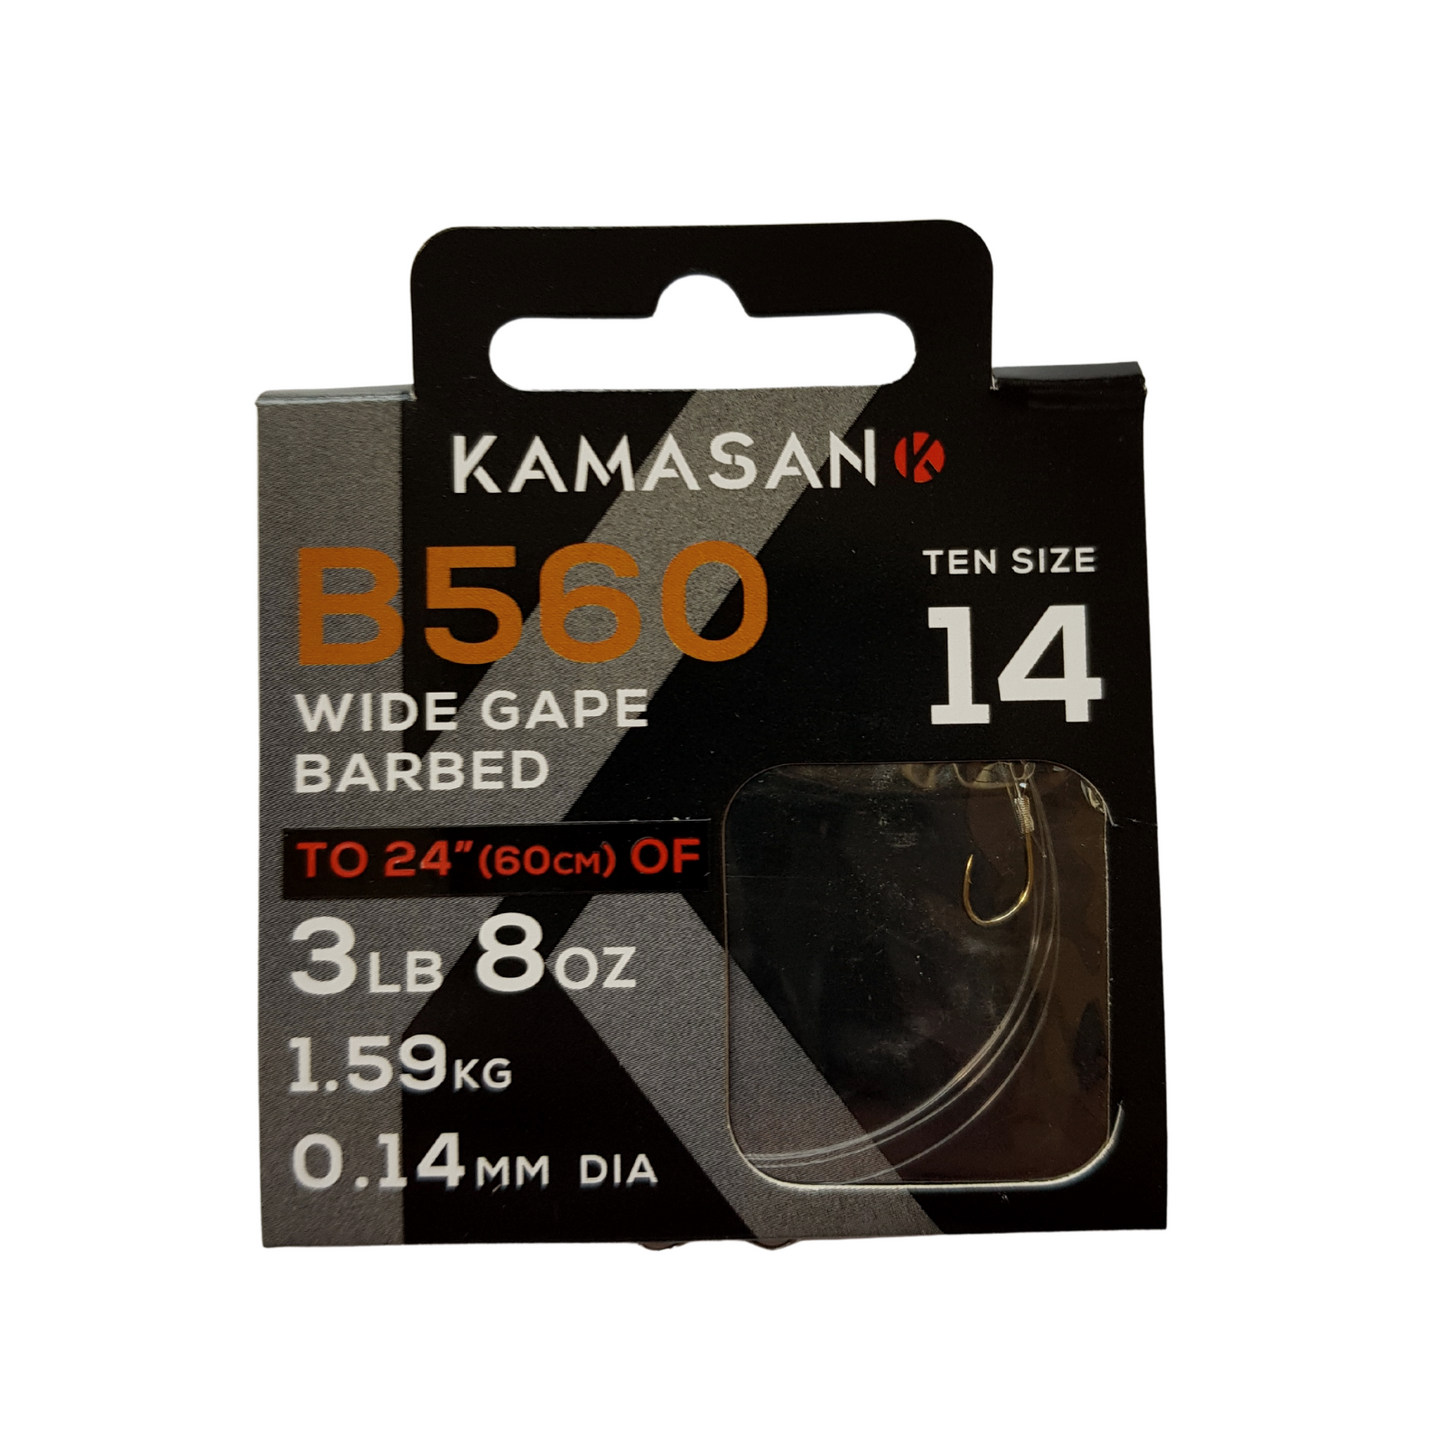 Kamasan B560 Hooks To Nylon 24 60cm.